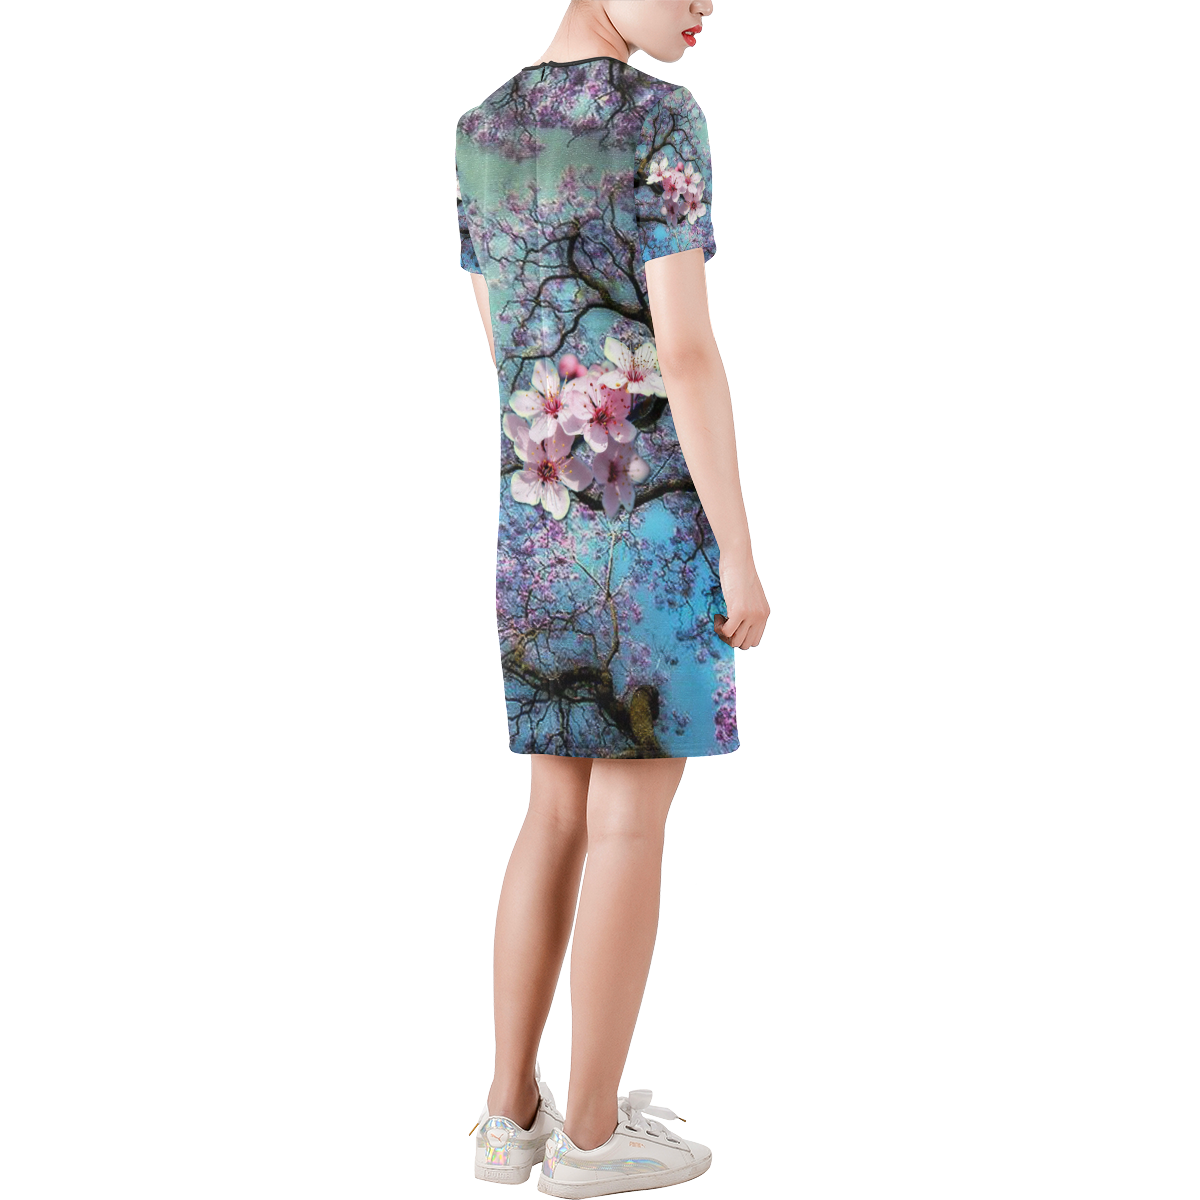 Cherry blossomL Short-Sleeve Round Neck A-Line Dress (Model D47)